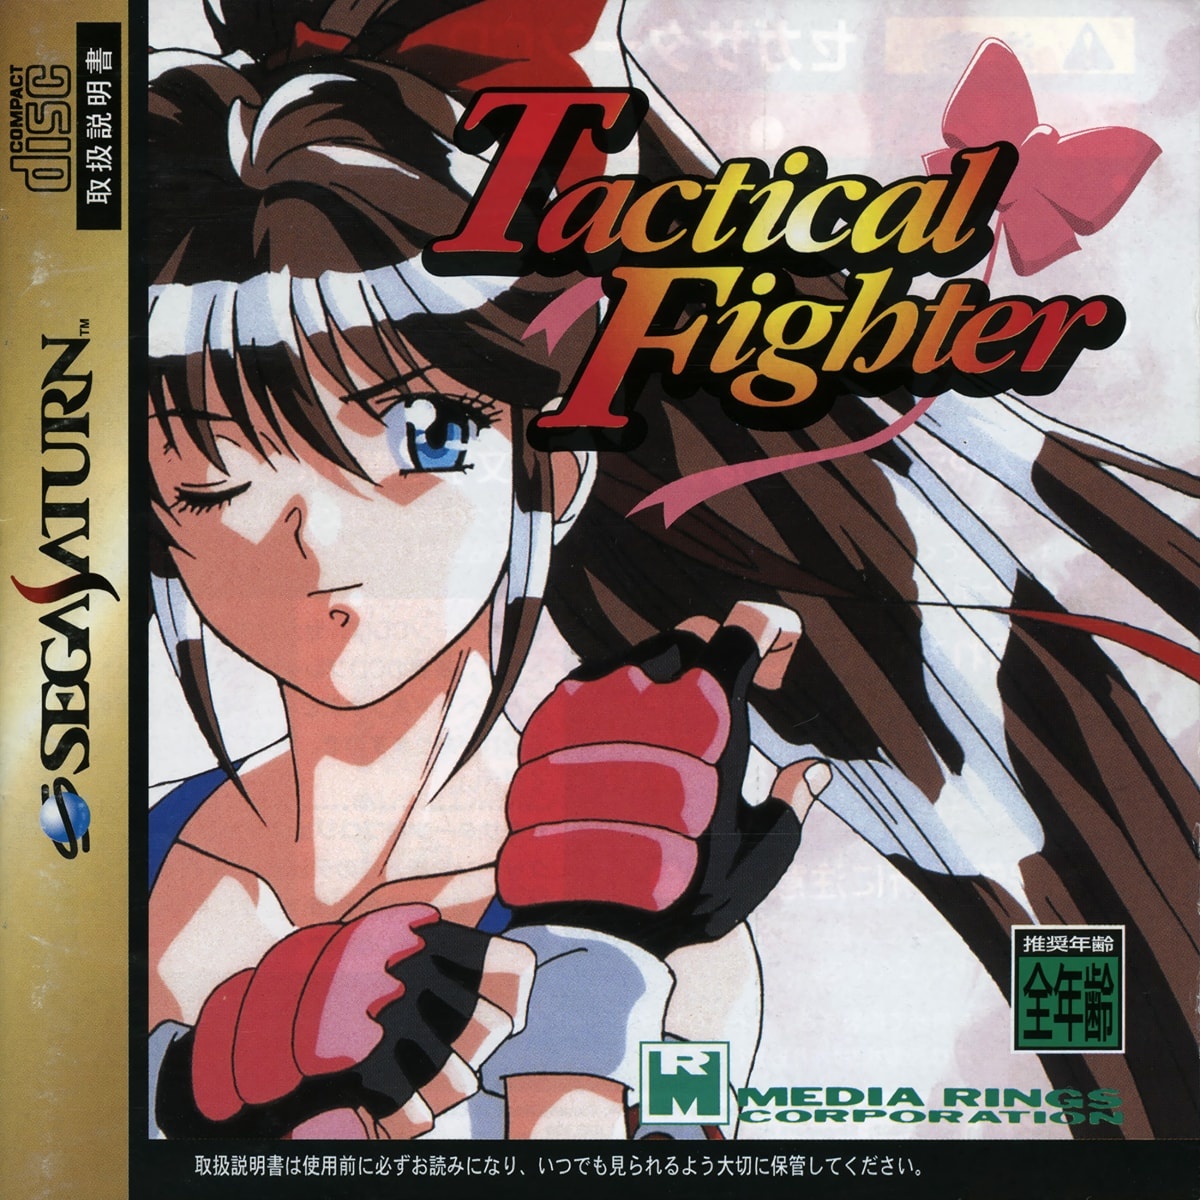 Capa do jogo Tactical Fighter